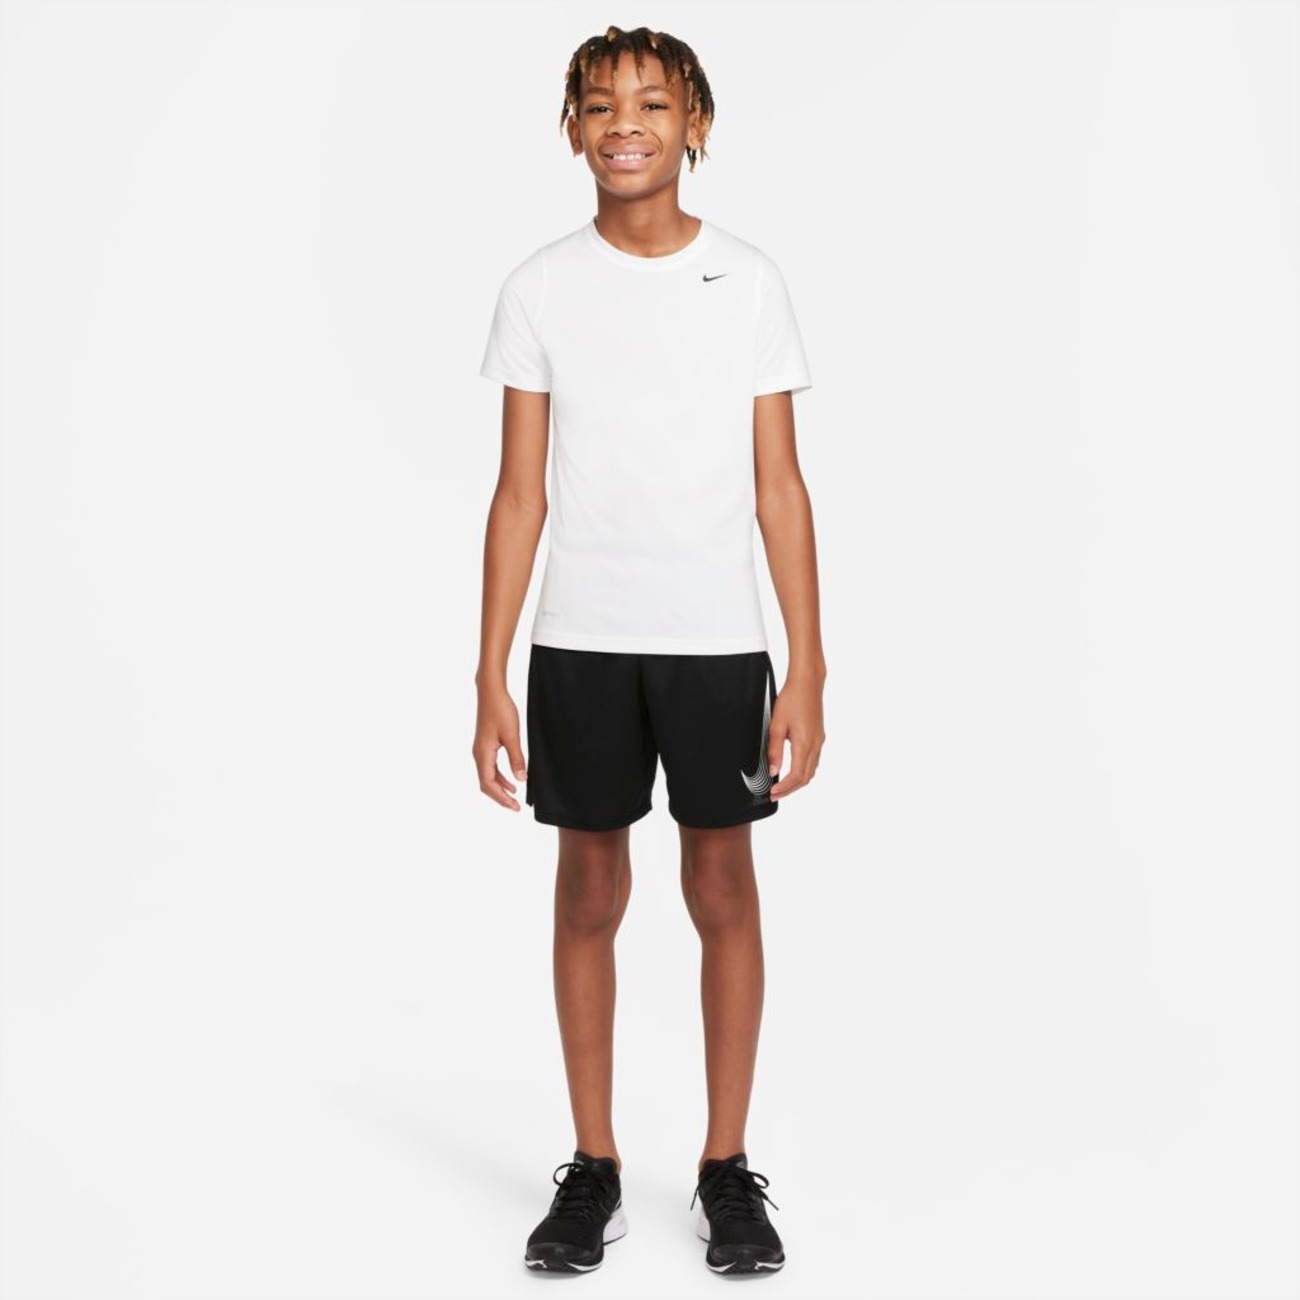 Shorts Nike Dri-FIT Infantil - Foto 6